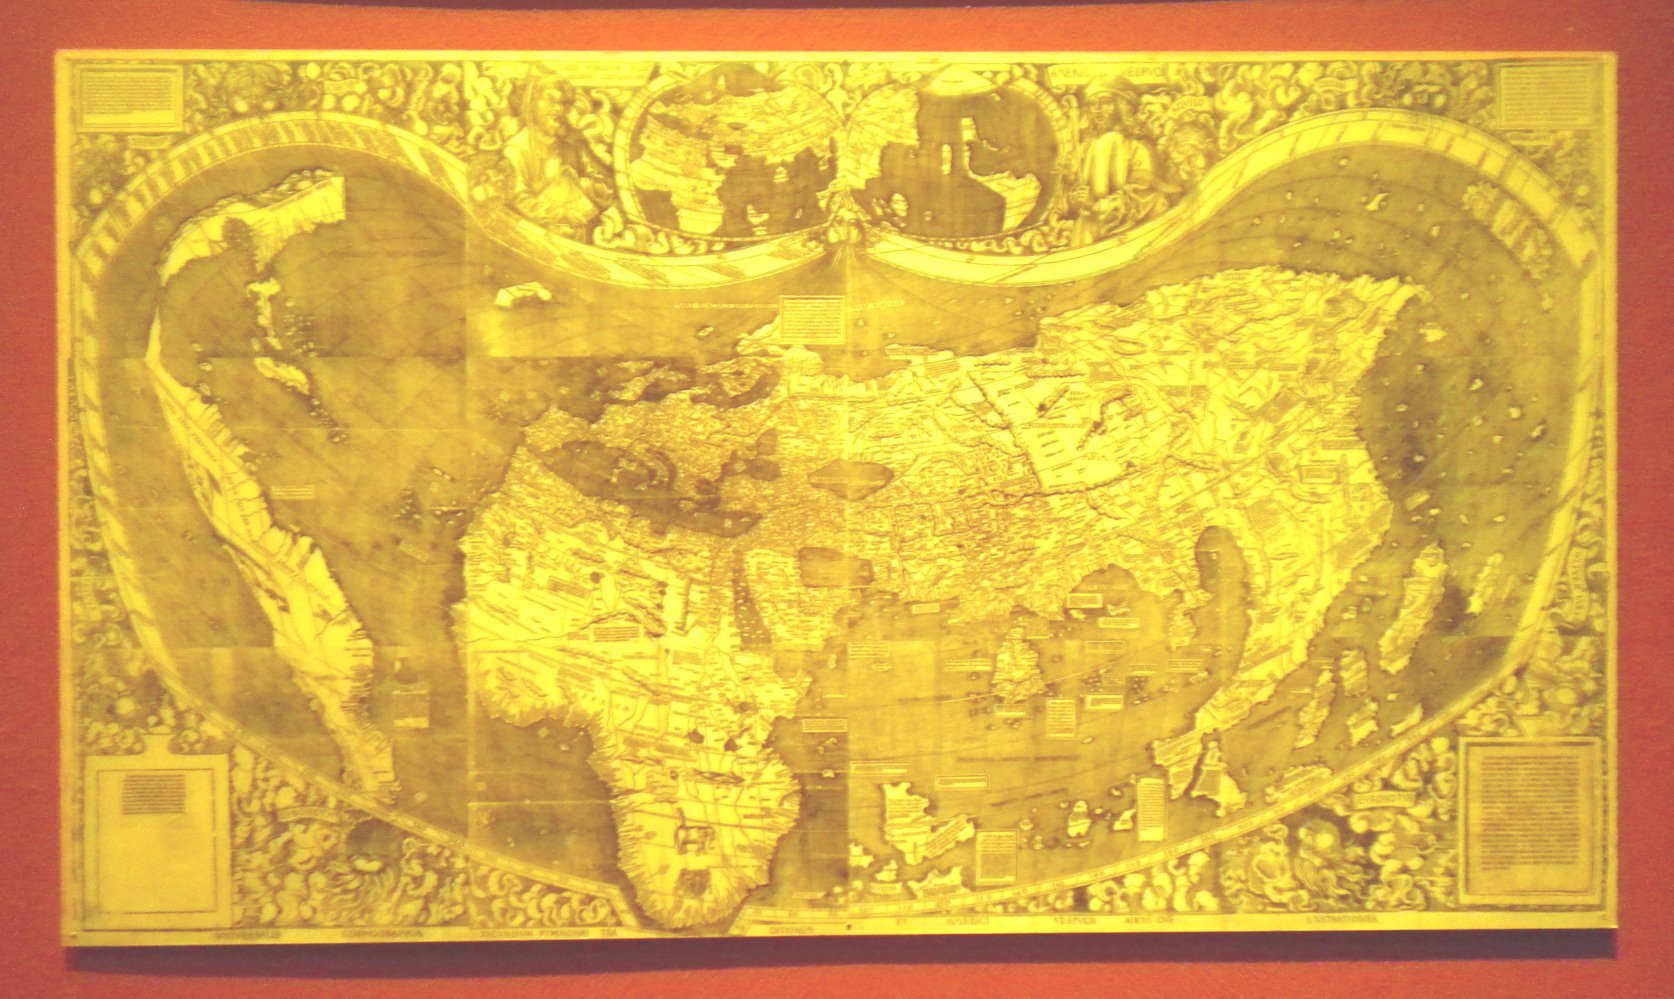 Weltkarte /
World map.